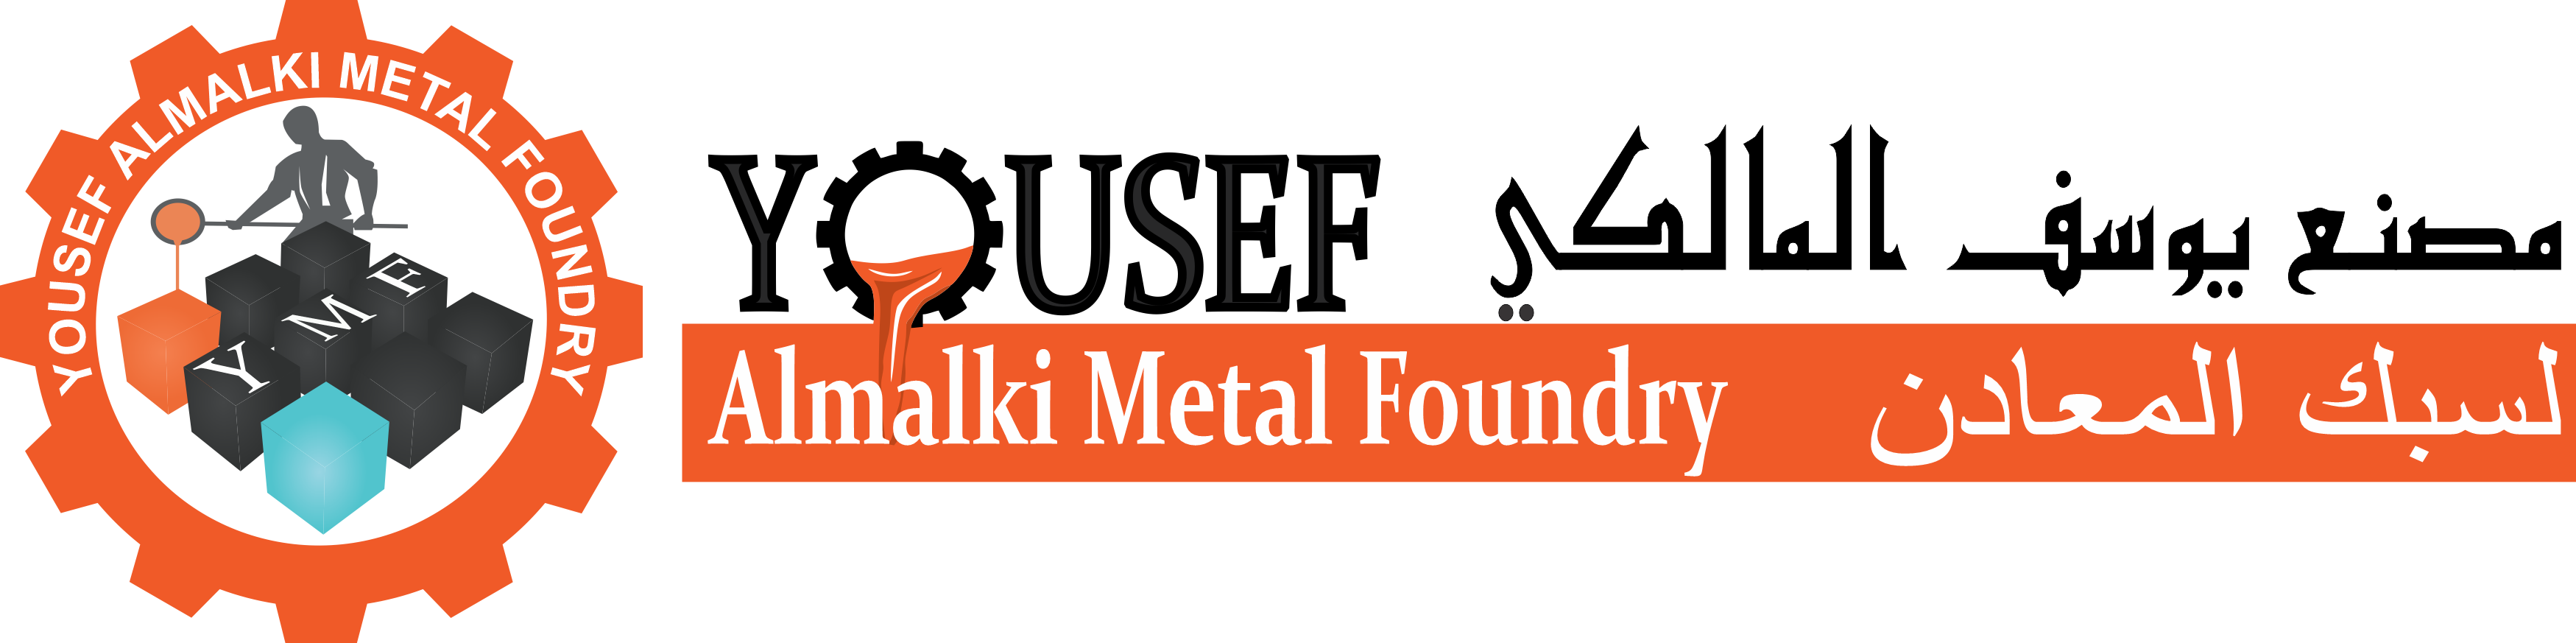 Yousef Almalki Metal Foundry